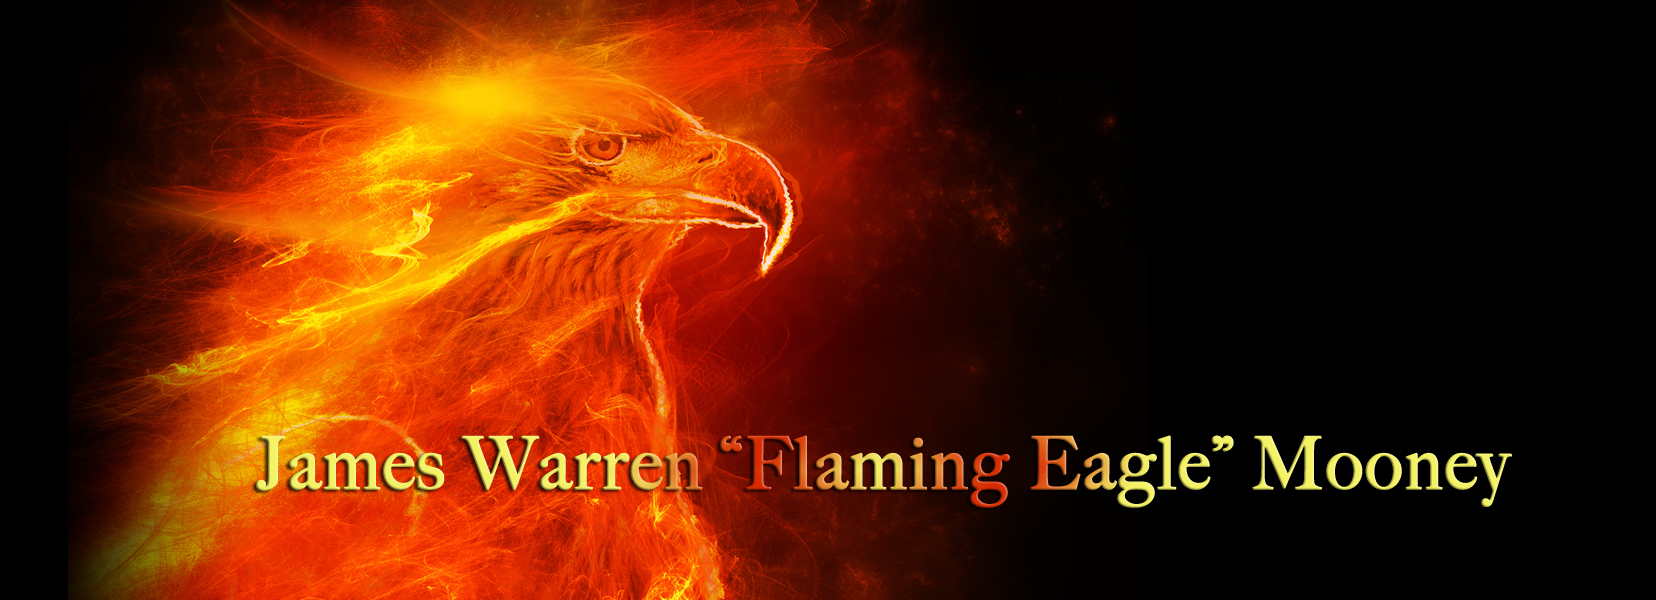 James Warren "Flaming Eagle" Mooney